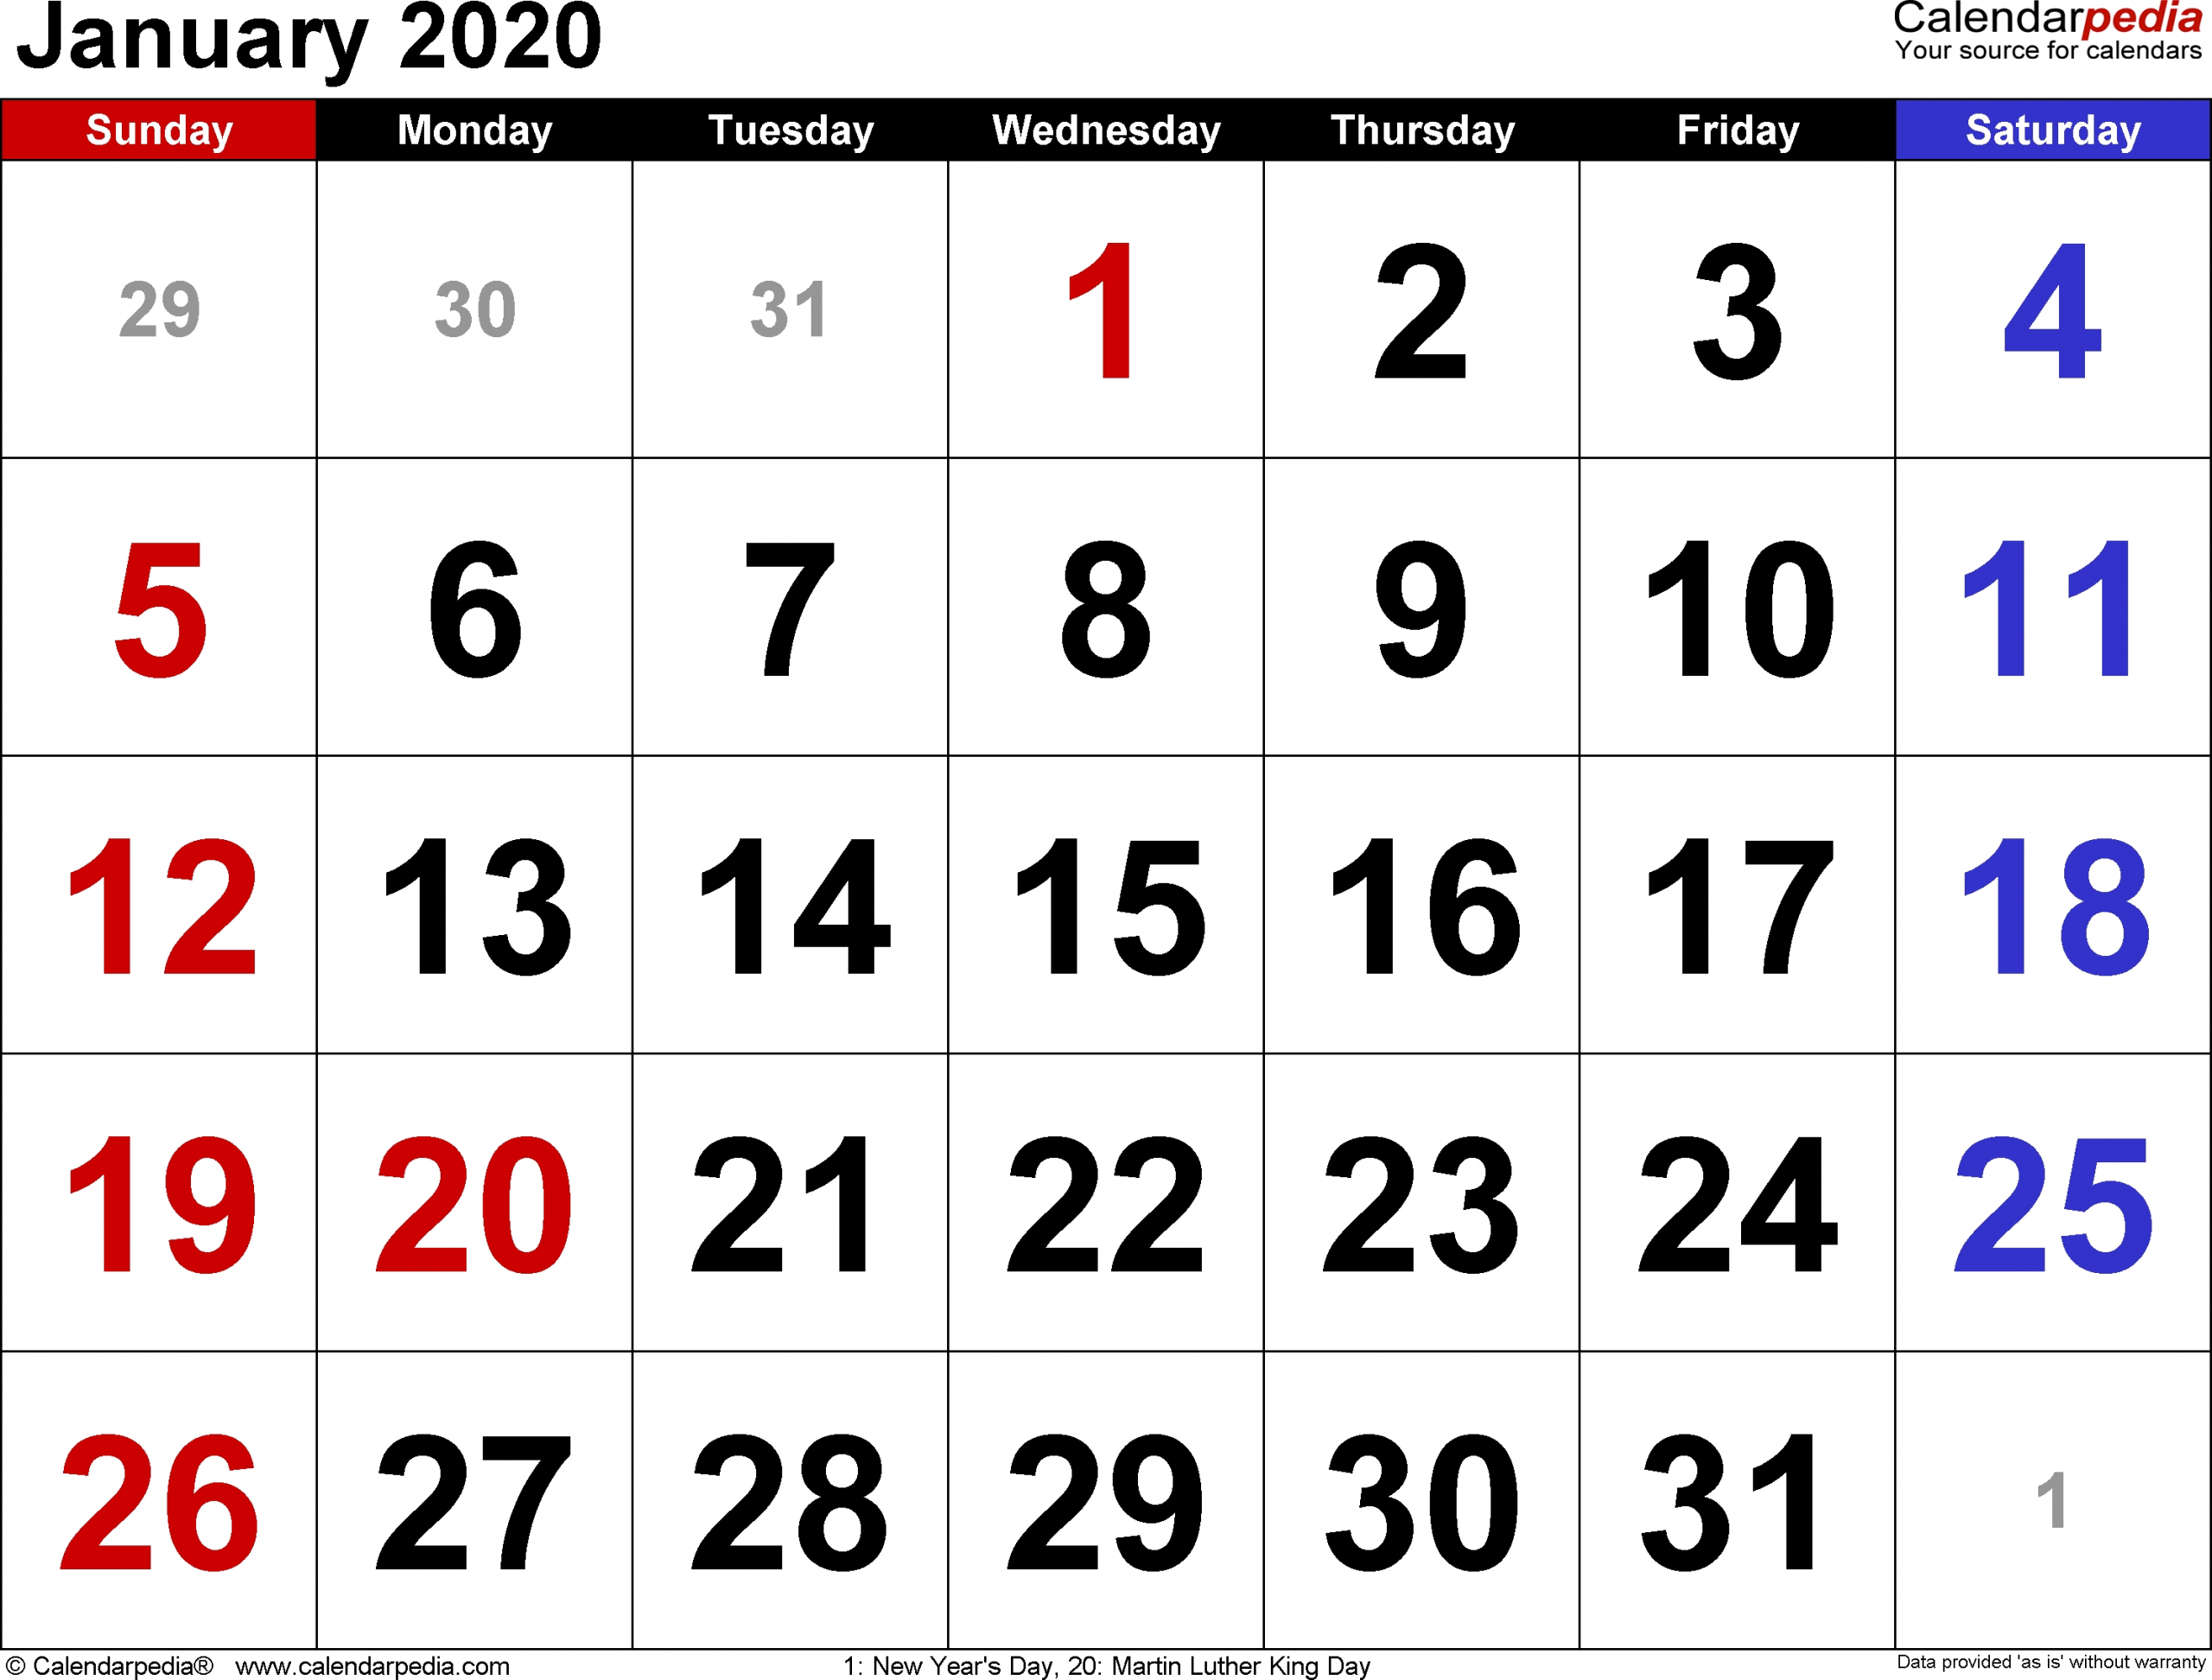 Category: Calendar 97 | Thegioithamdep Tamil Calendar 2020 January